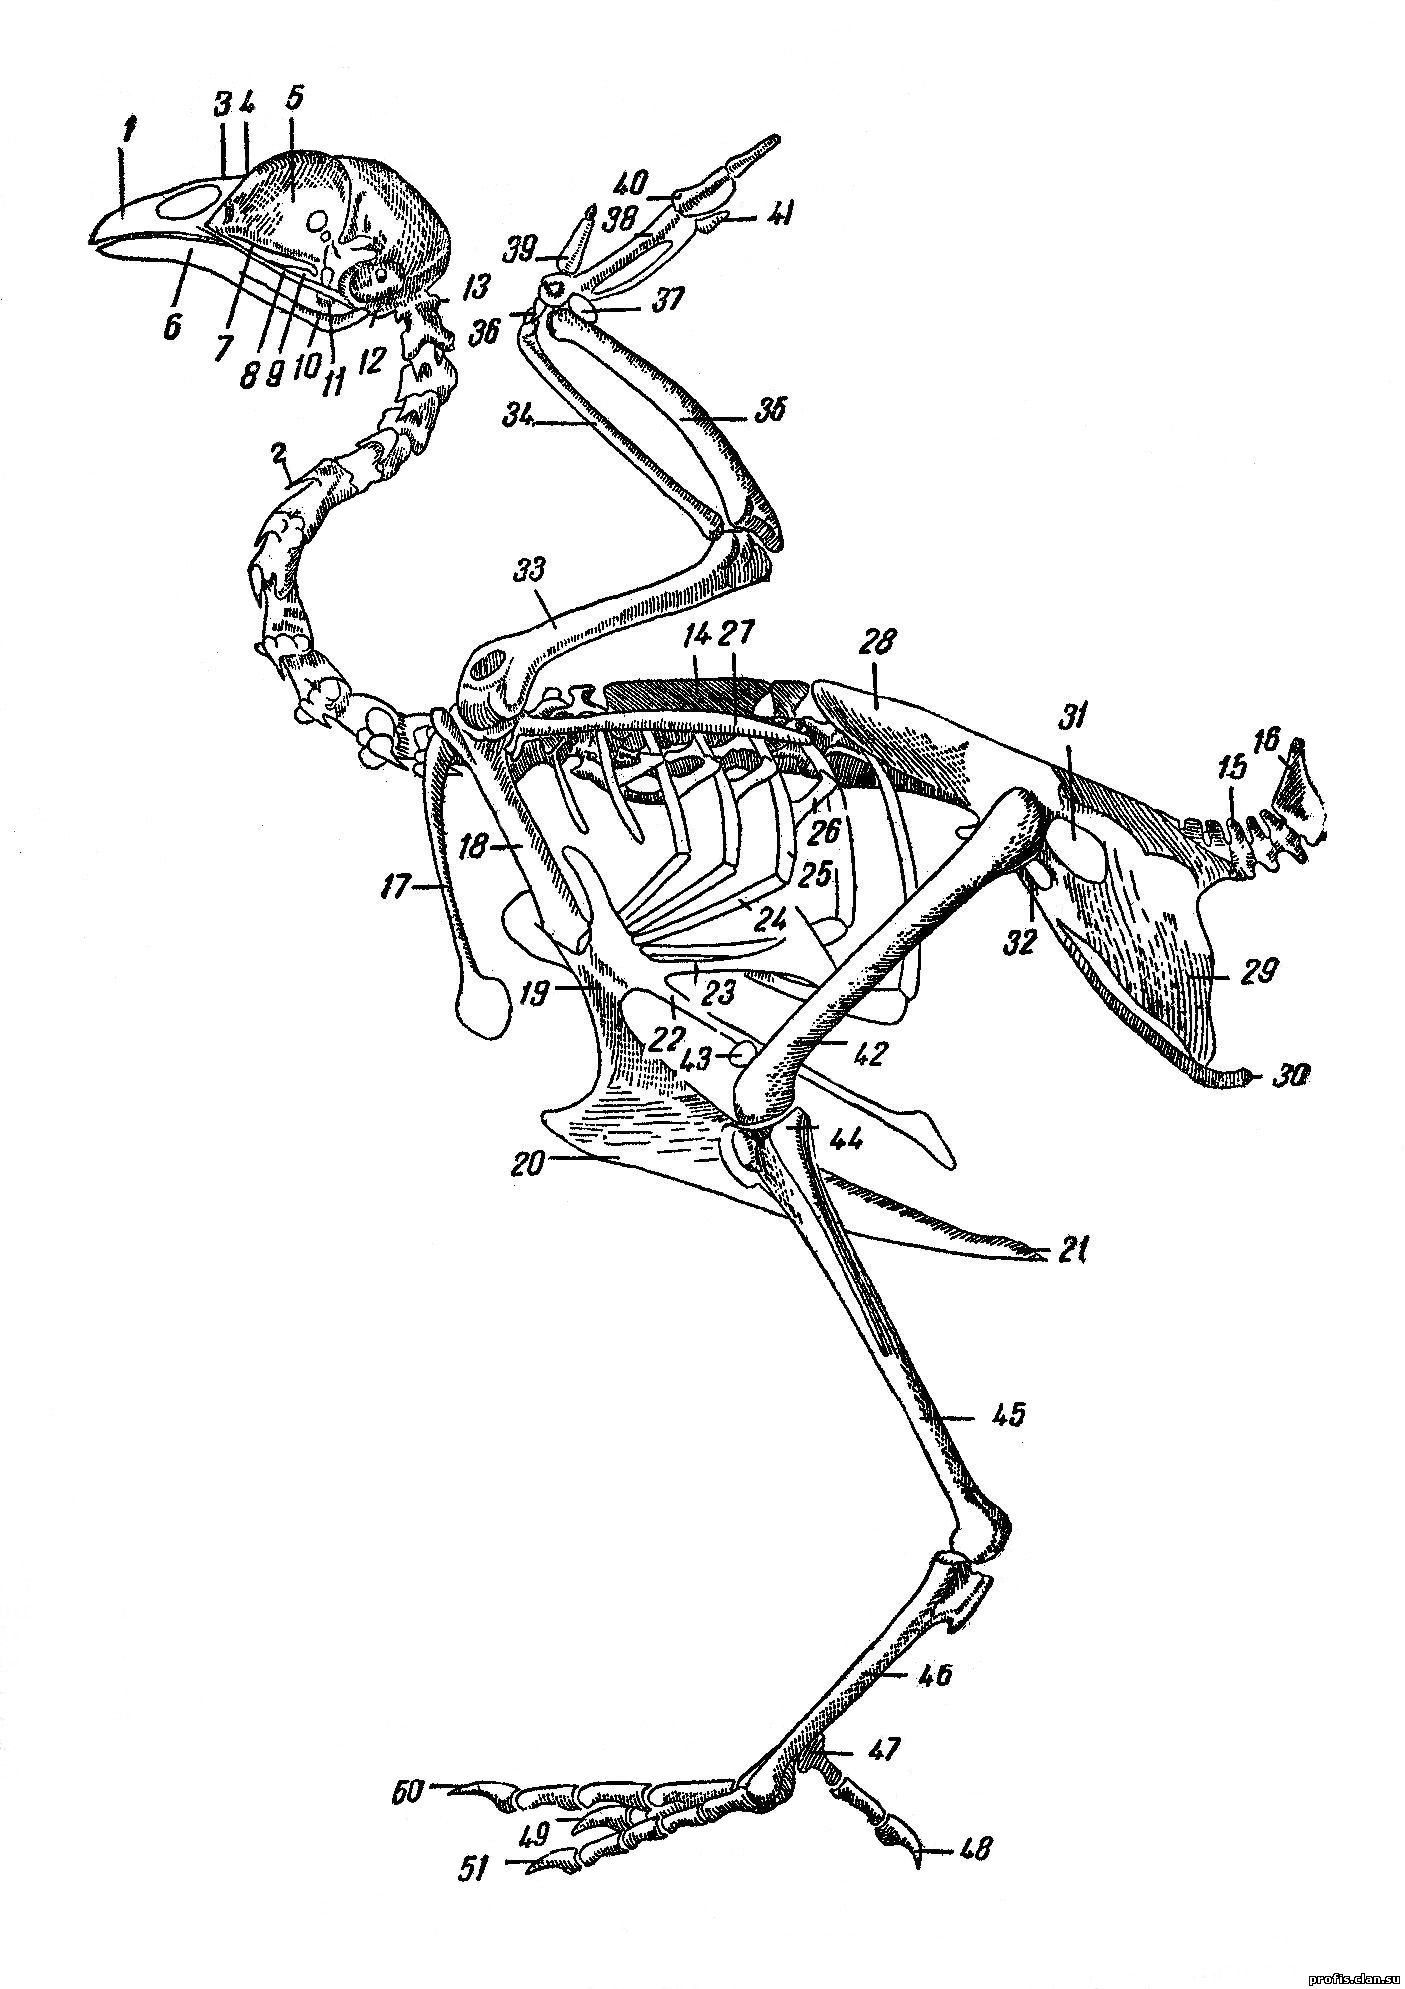 Вилочка у птиц это. Кости курицы анатомия. Строение скелета курицы. Скелет индейки строение. Строение скелета курицы схема.